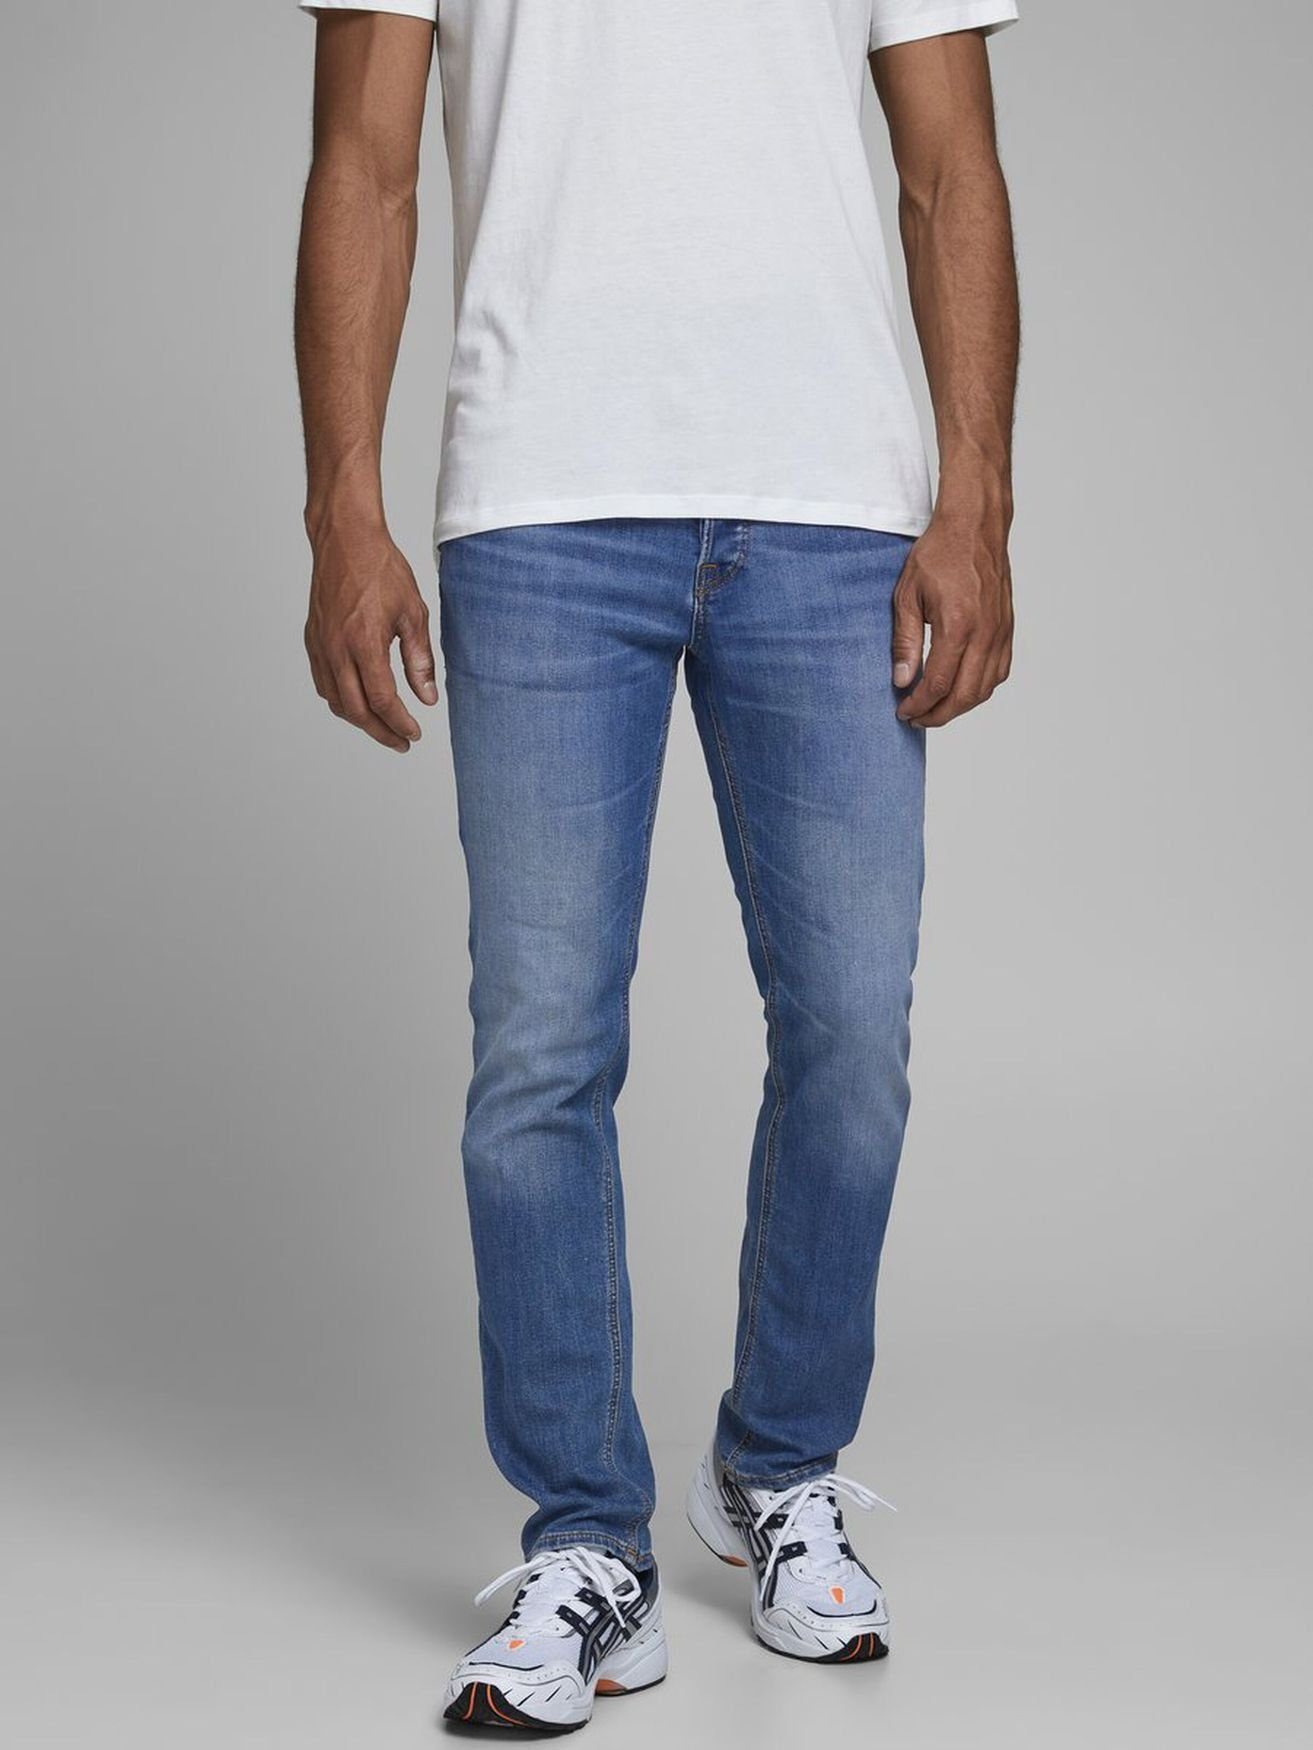 & Blau AM GLENN GLENN Jones ORIGINAL Jack Jeans in JJI Slim-fit-Jeans 3465 (1-tlg) Tapered Skinny